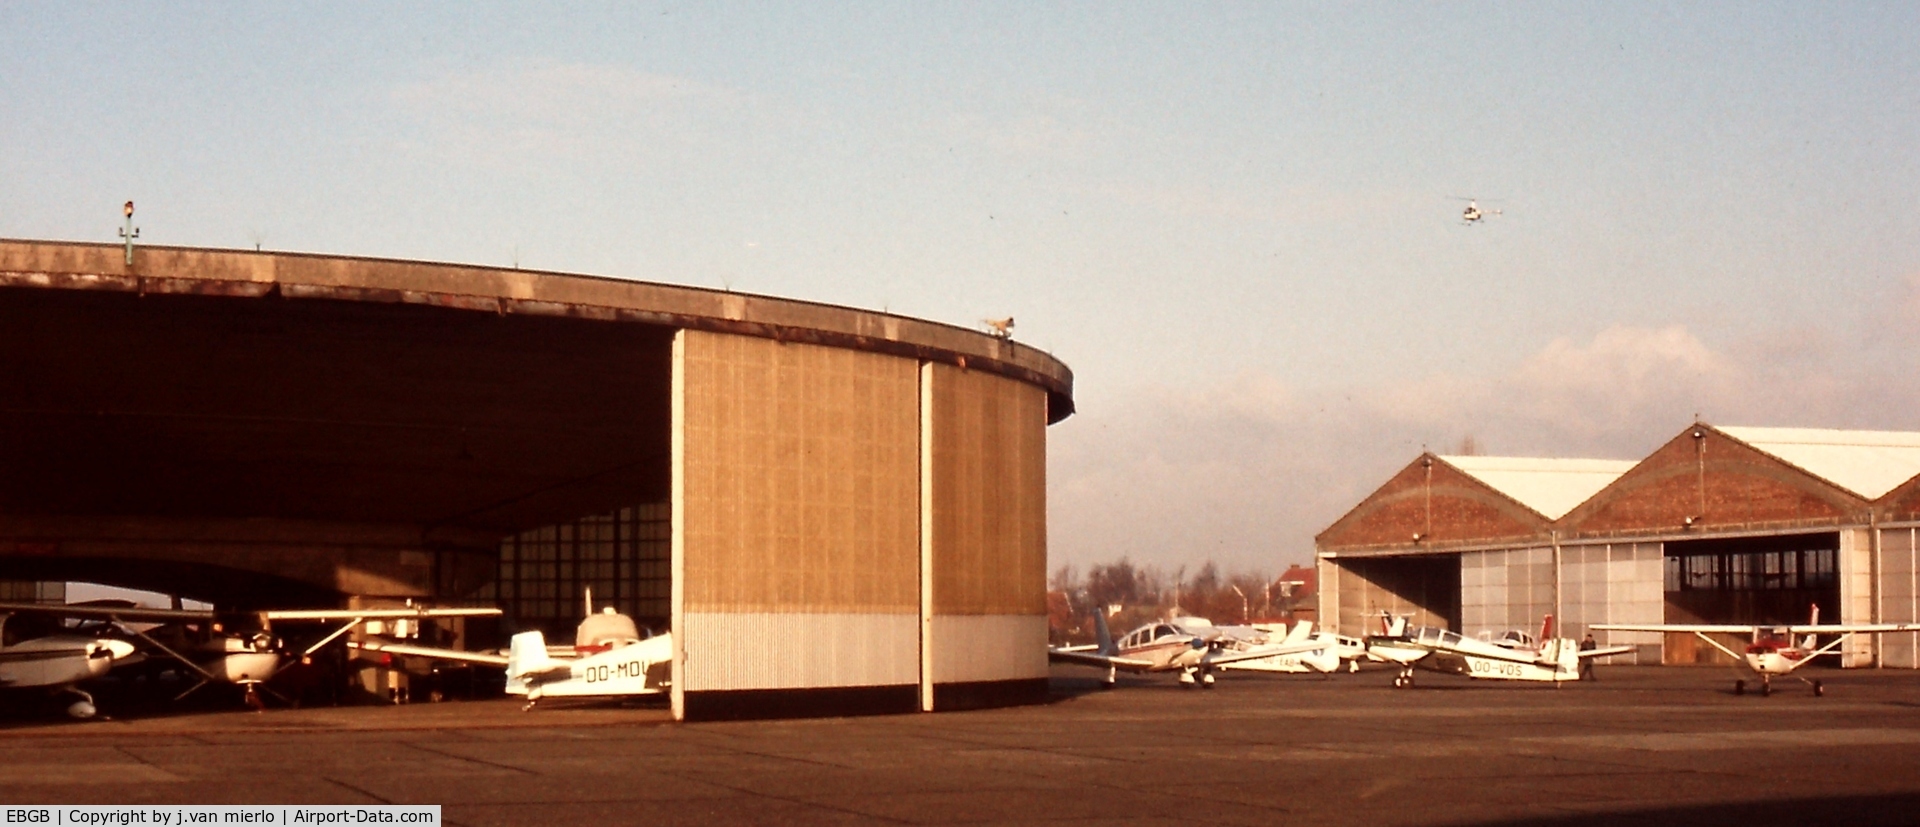 Grimbergen Airfield Airport, Grimbergen Belgium (EBGB) - View on one of two unique circular hangars '90